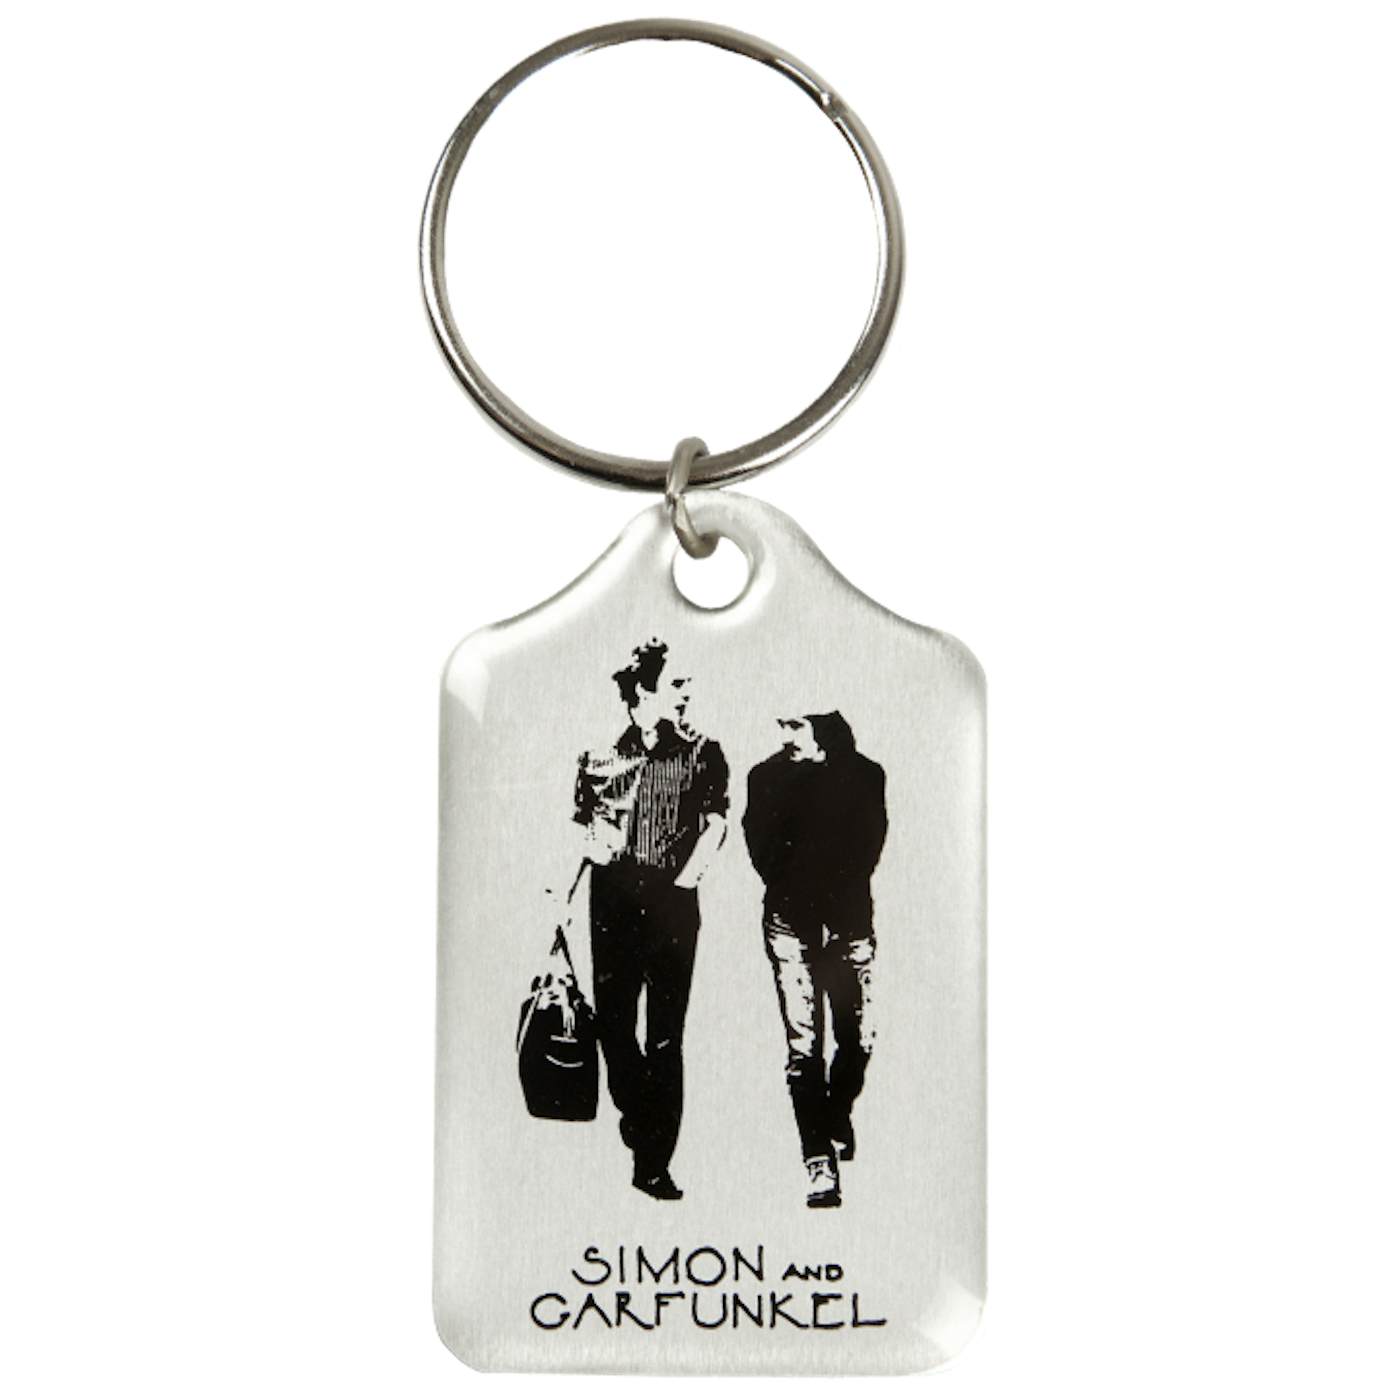 Simon & Garfunkel "Old Friends" Aluminum 1 3/8" x 2 1/4" Keychain